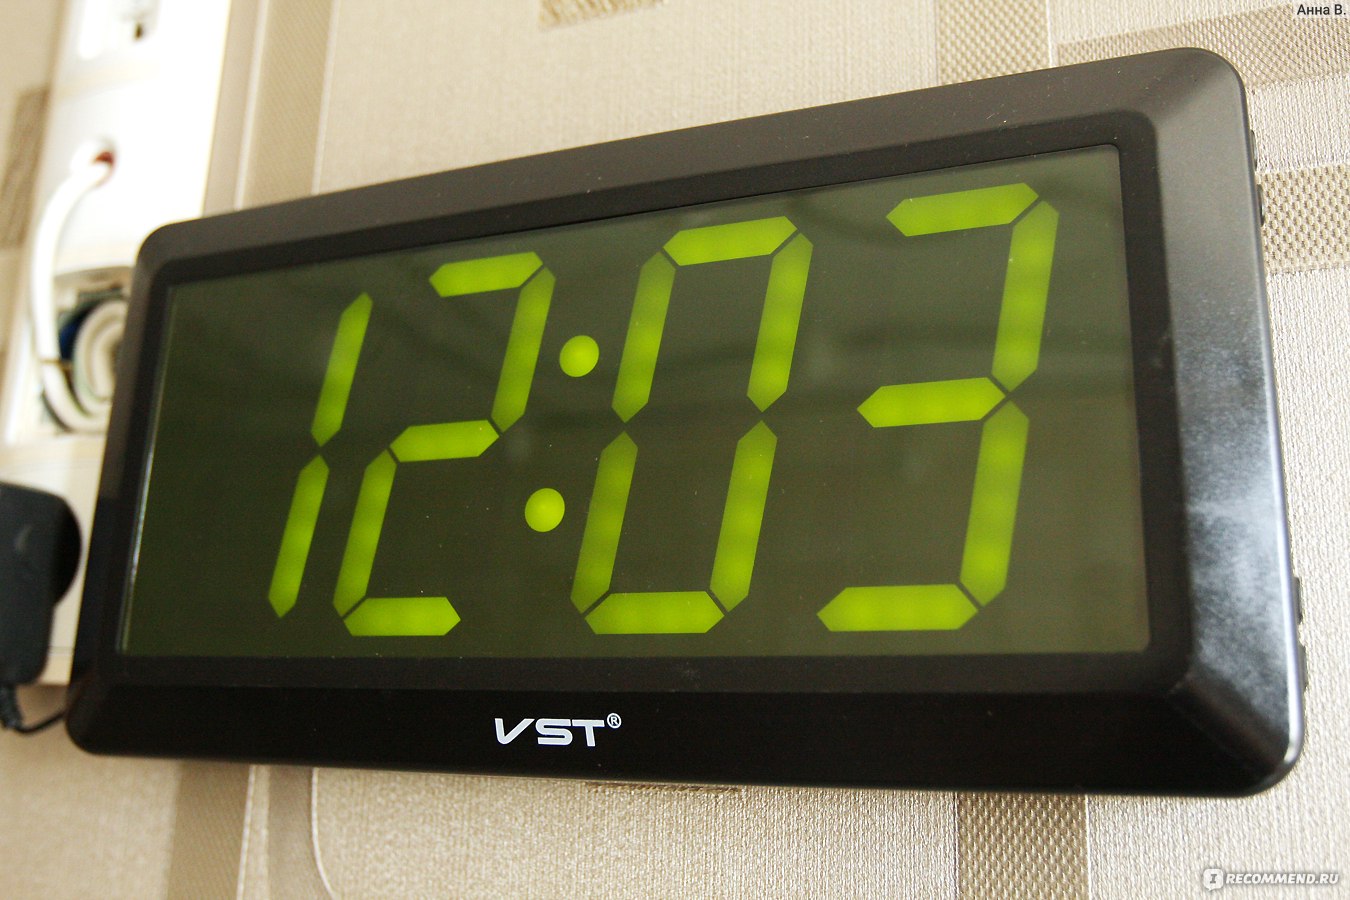 Часы vst видео. Часы VST 780. Настенные часы VST 780. Часы VST настенные 780s. VST-780) зеленая подсветка.